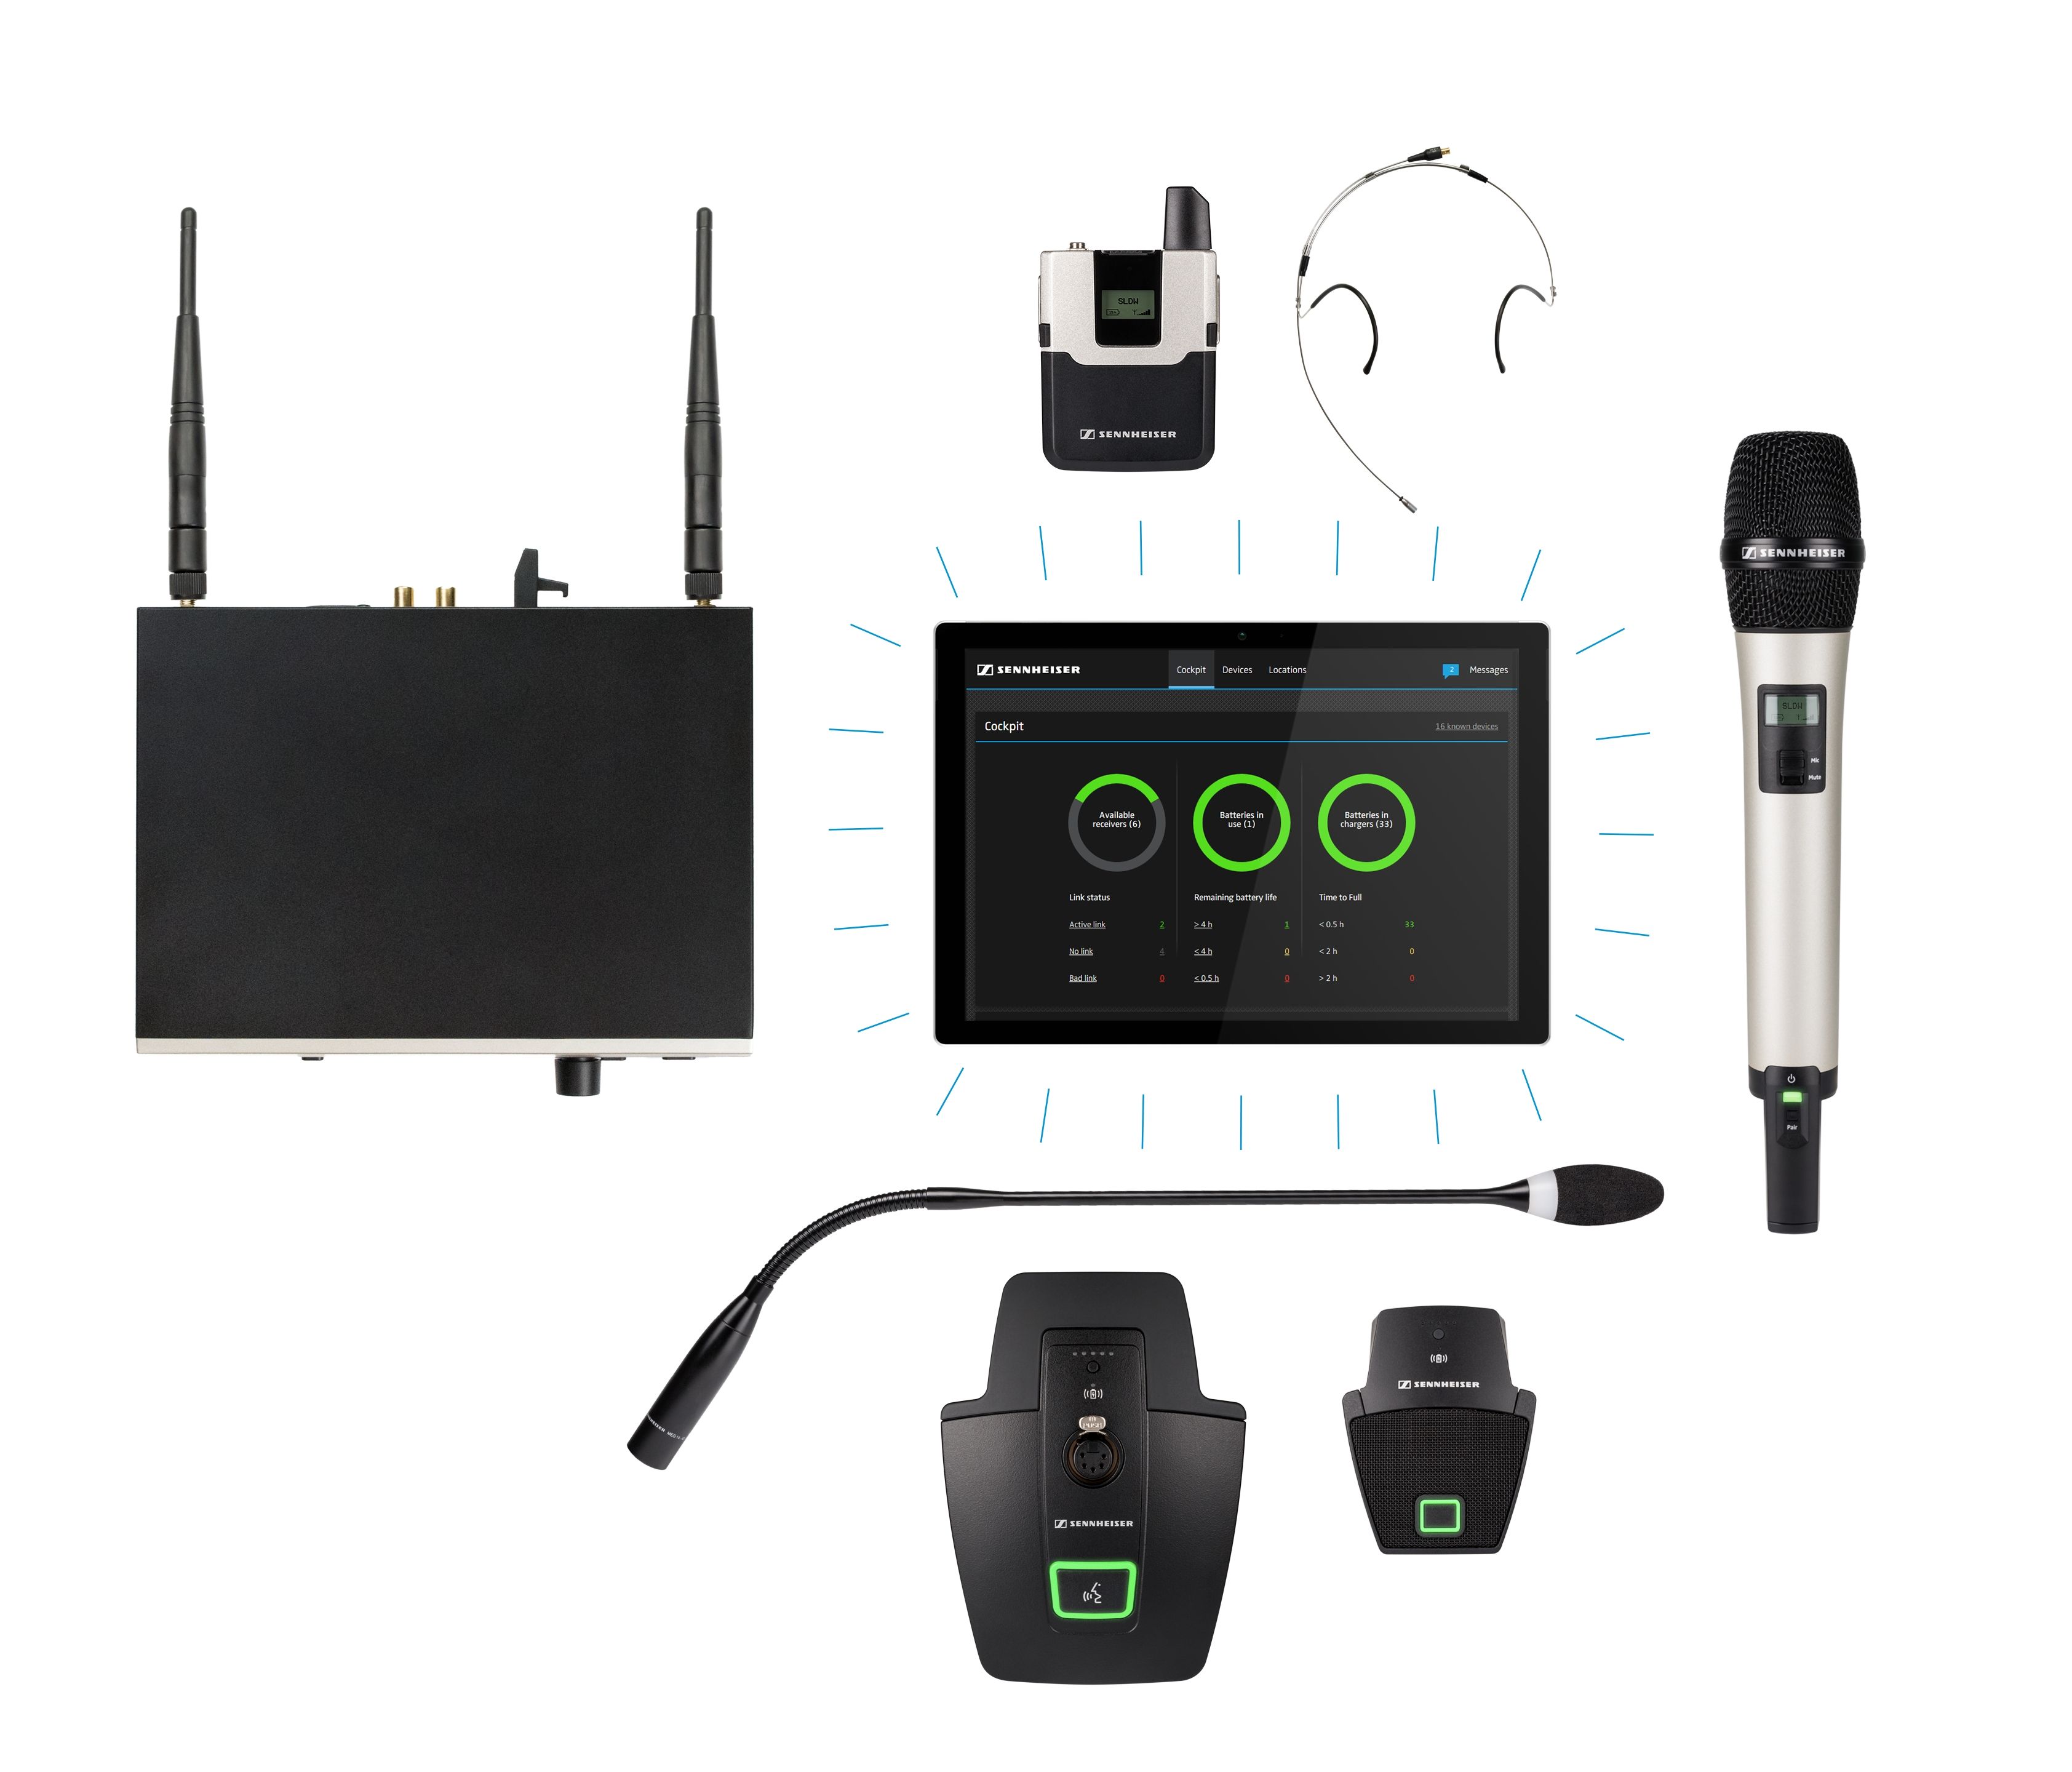 The Sennheiser SpeechLine Wireless Series provides specialist tools for speech applications